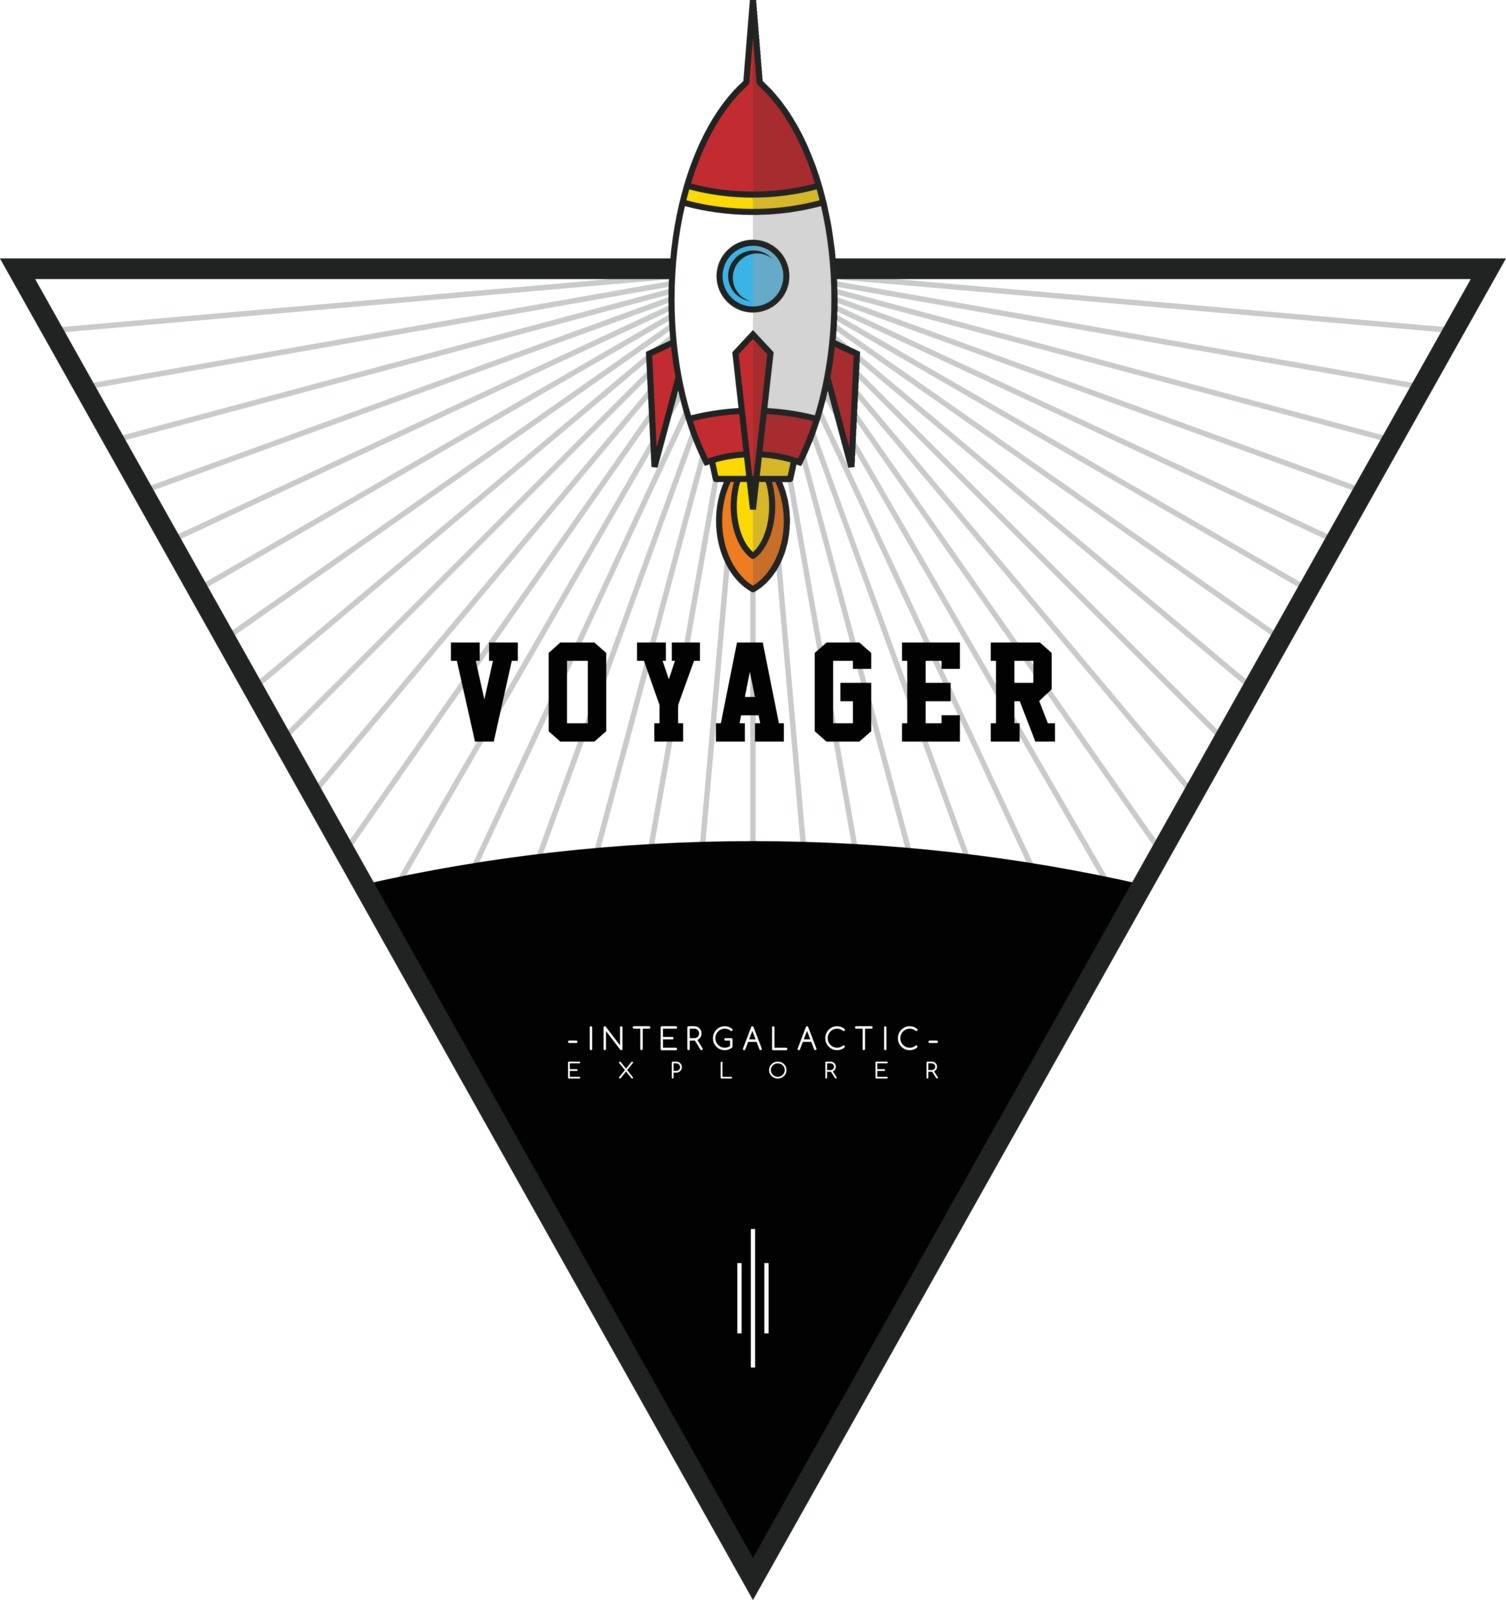 space exploration shuttle ship badge label logo icon vector